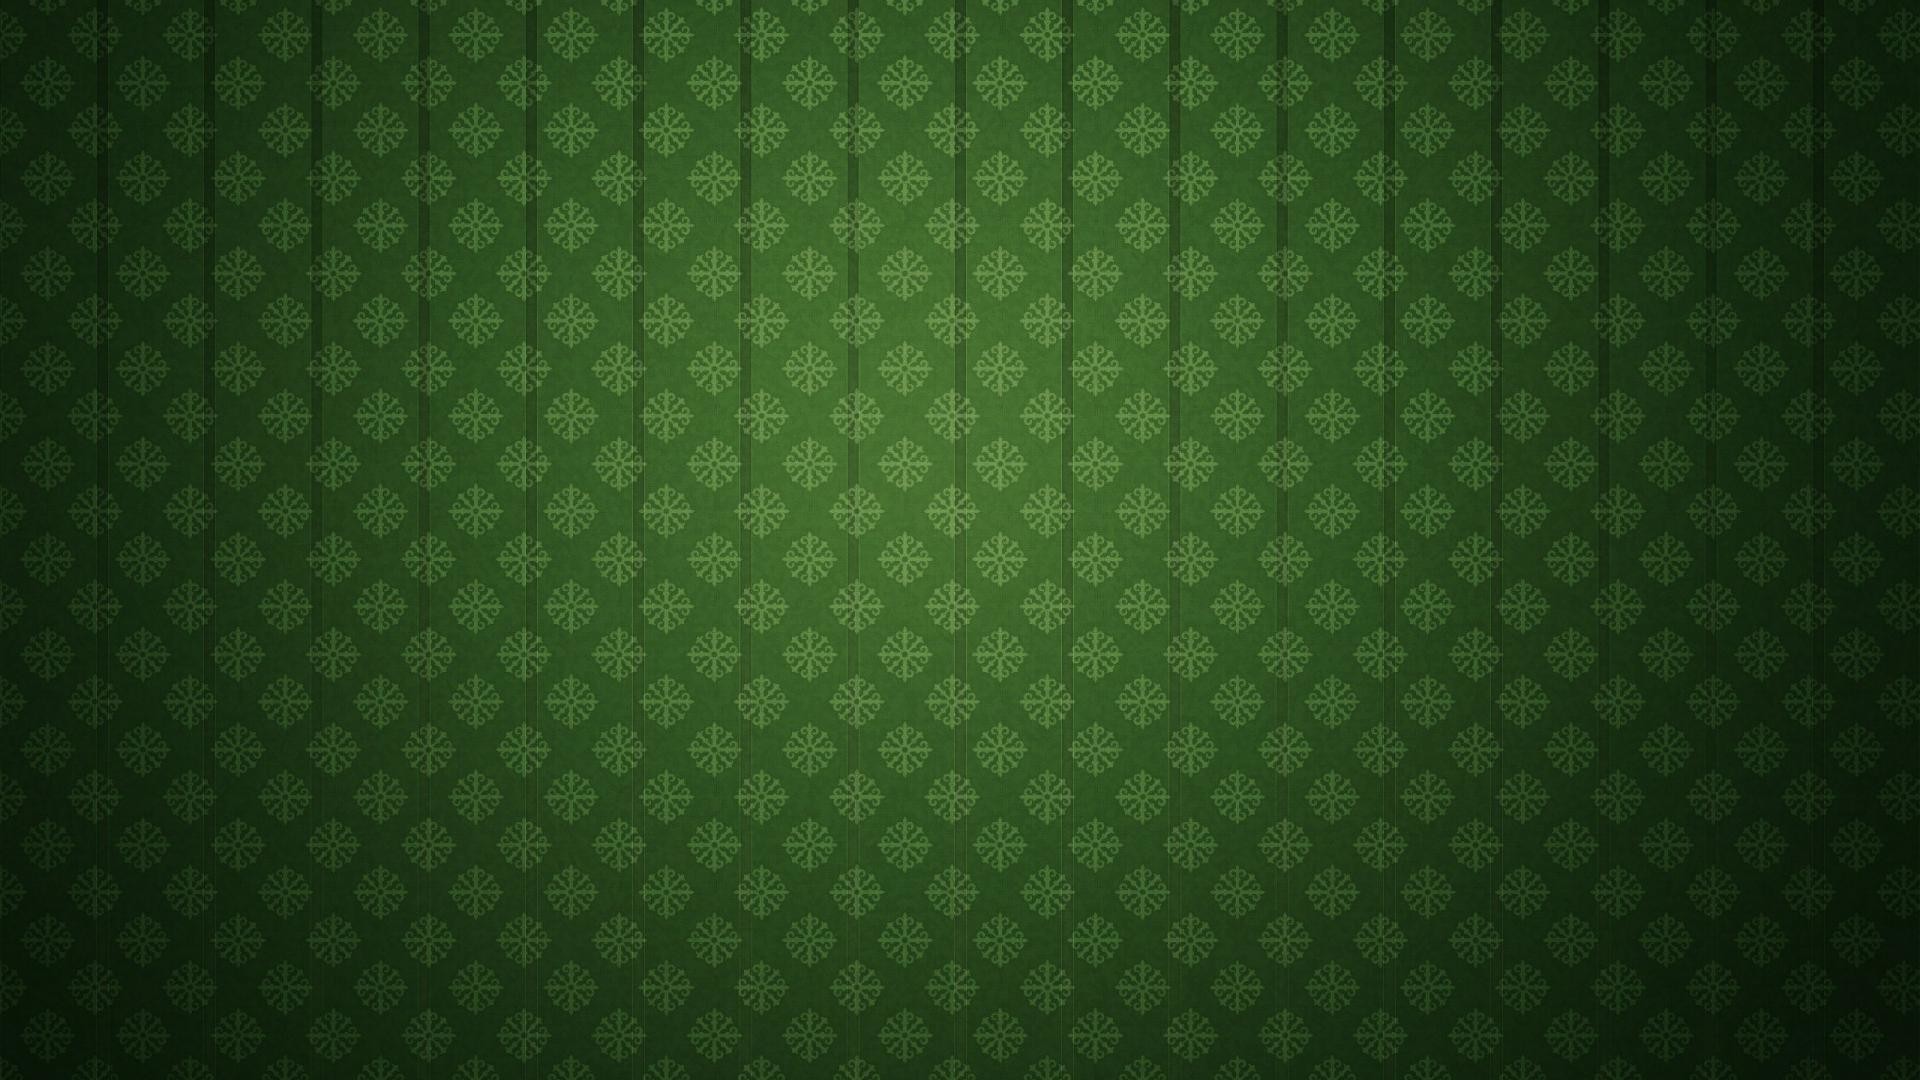 Cool Green stripes hd desktop backgrounds wide wallpapers1280x800,1440×900,1680×1050